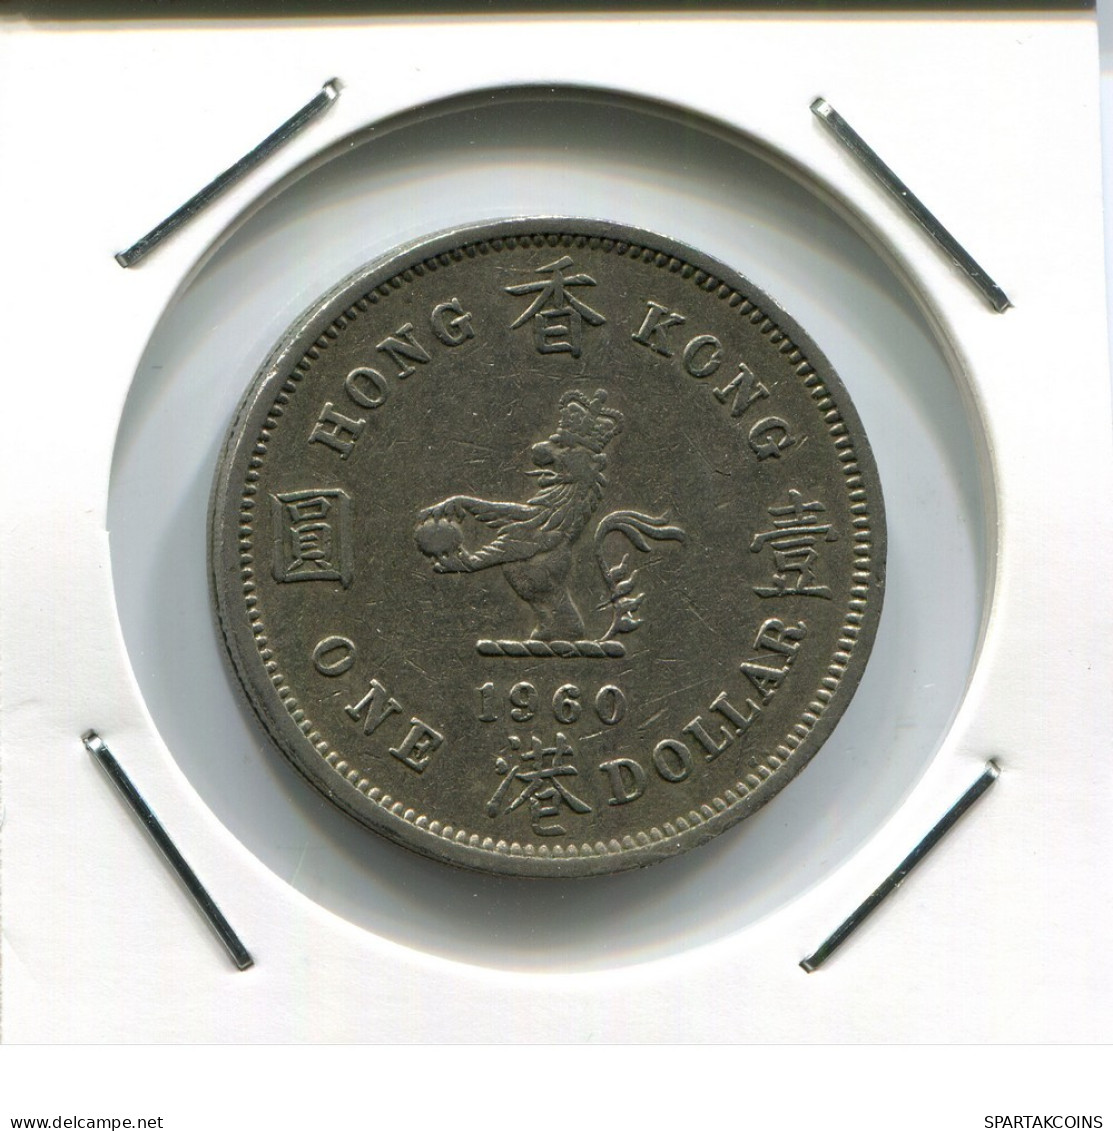 1 DOLLAR 1960 HONG KONG Coin #AR573.U.A - Hong Kong